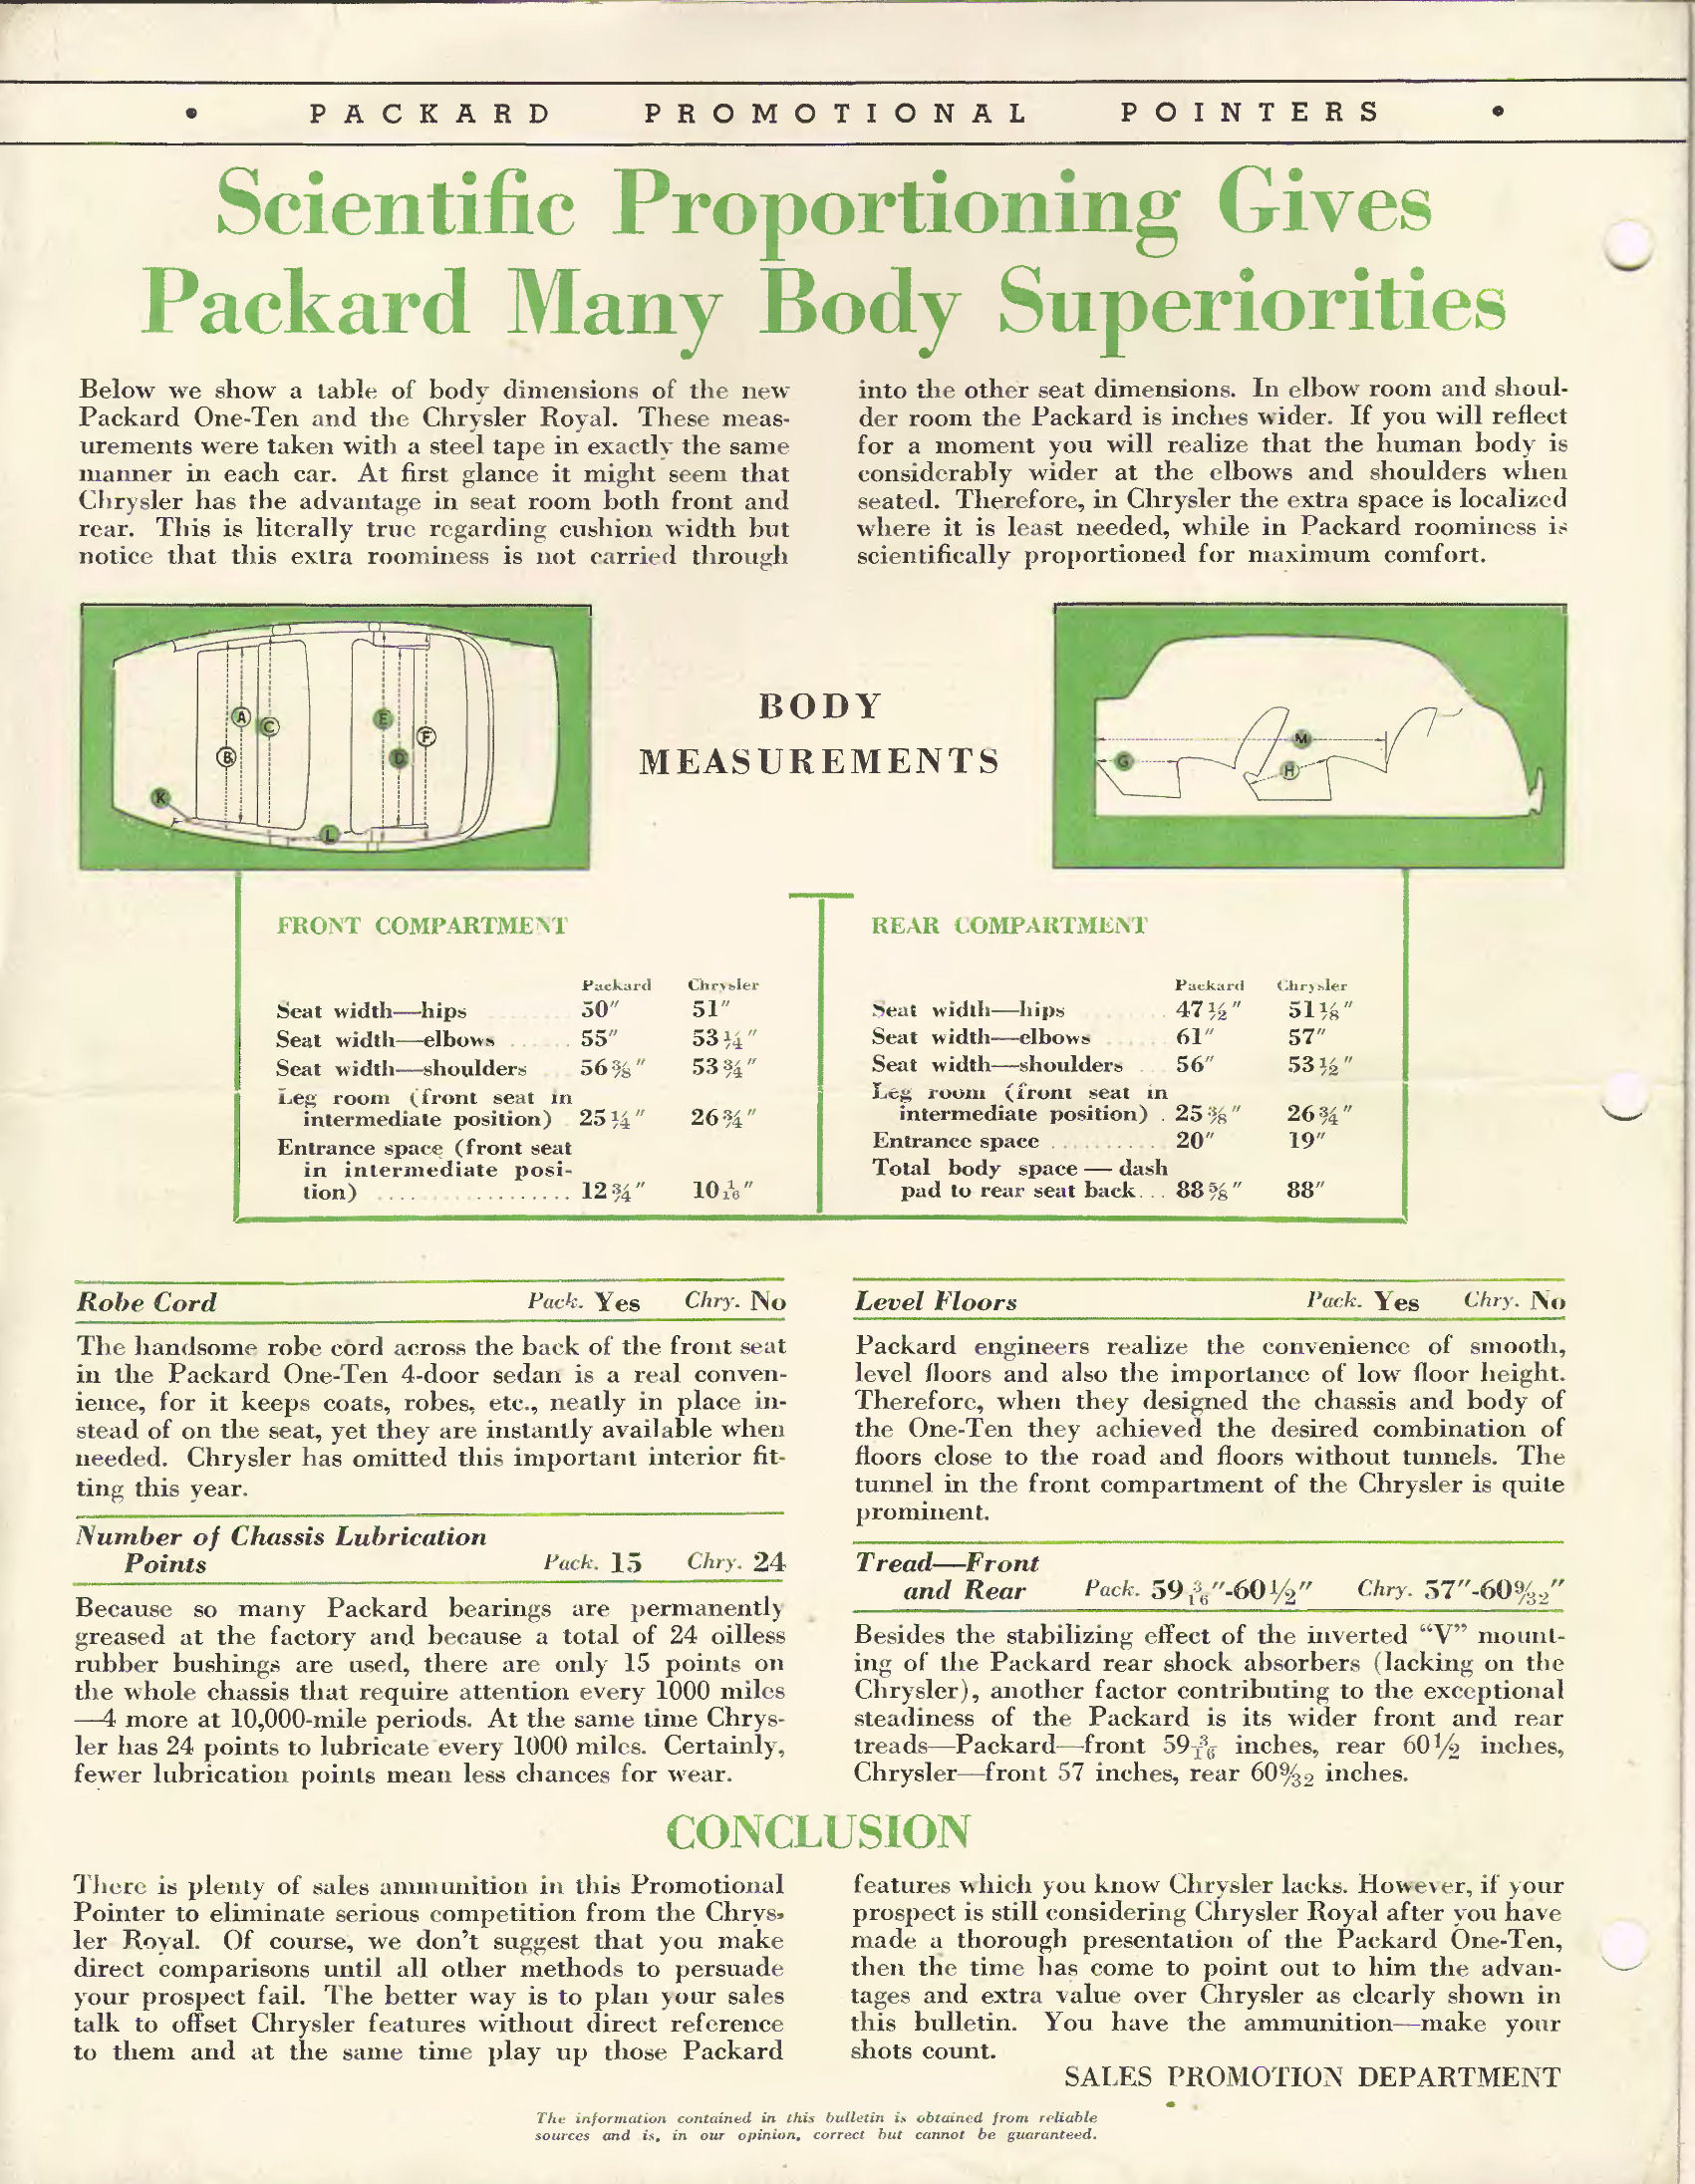 1940_Packard-Chrysler_Comparison-04